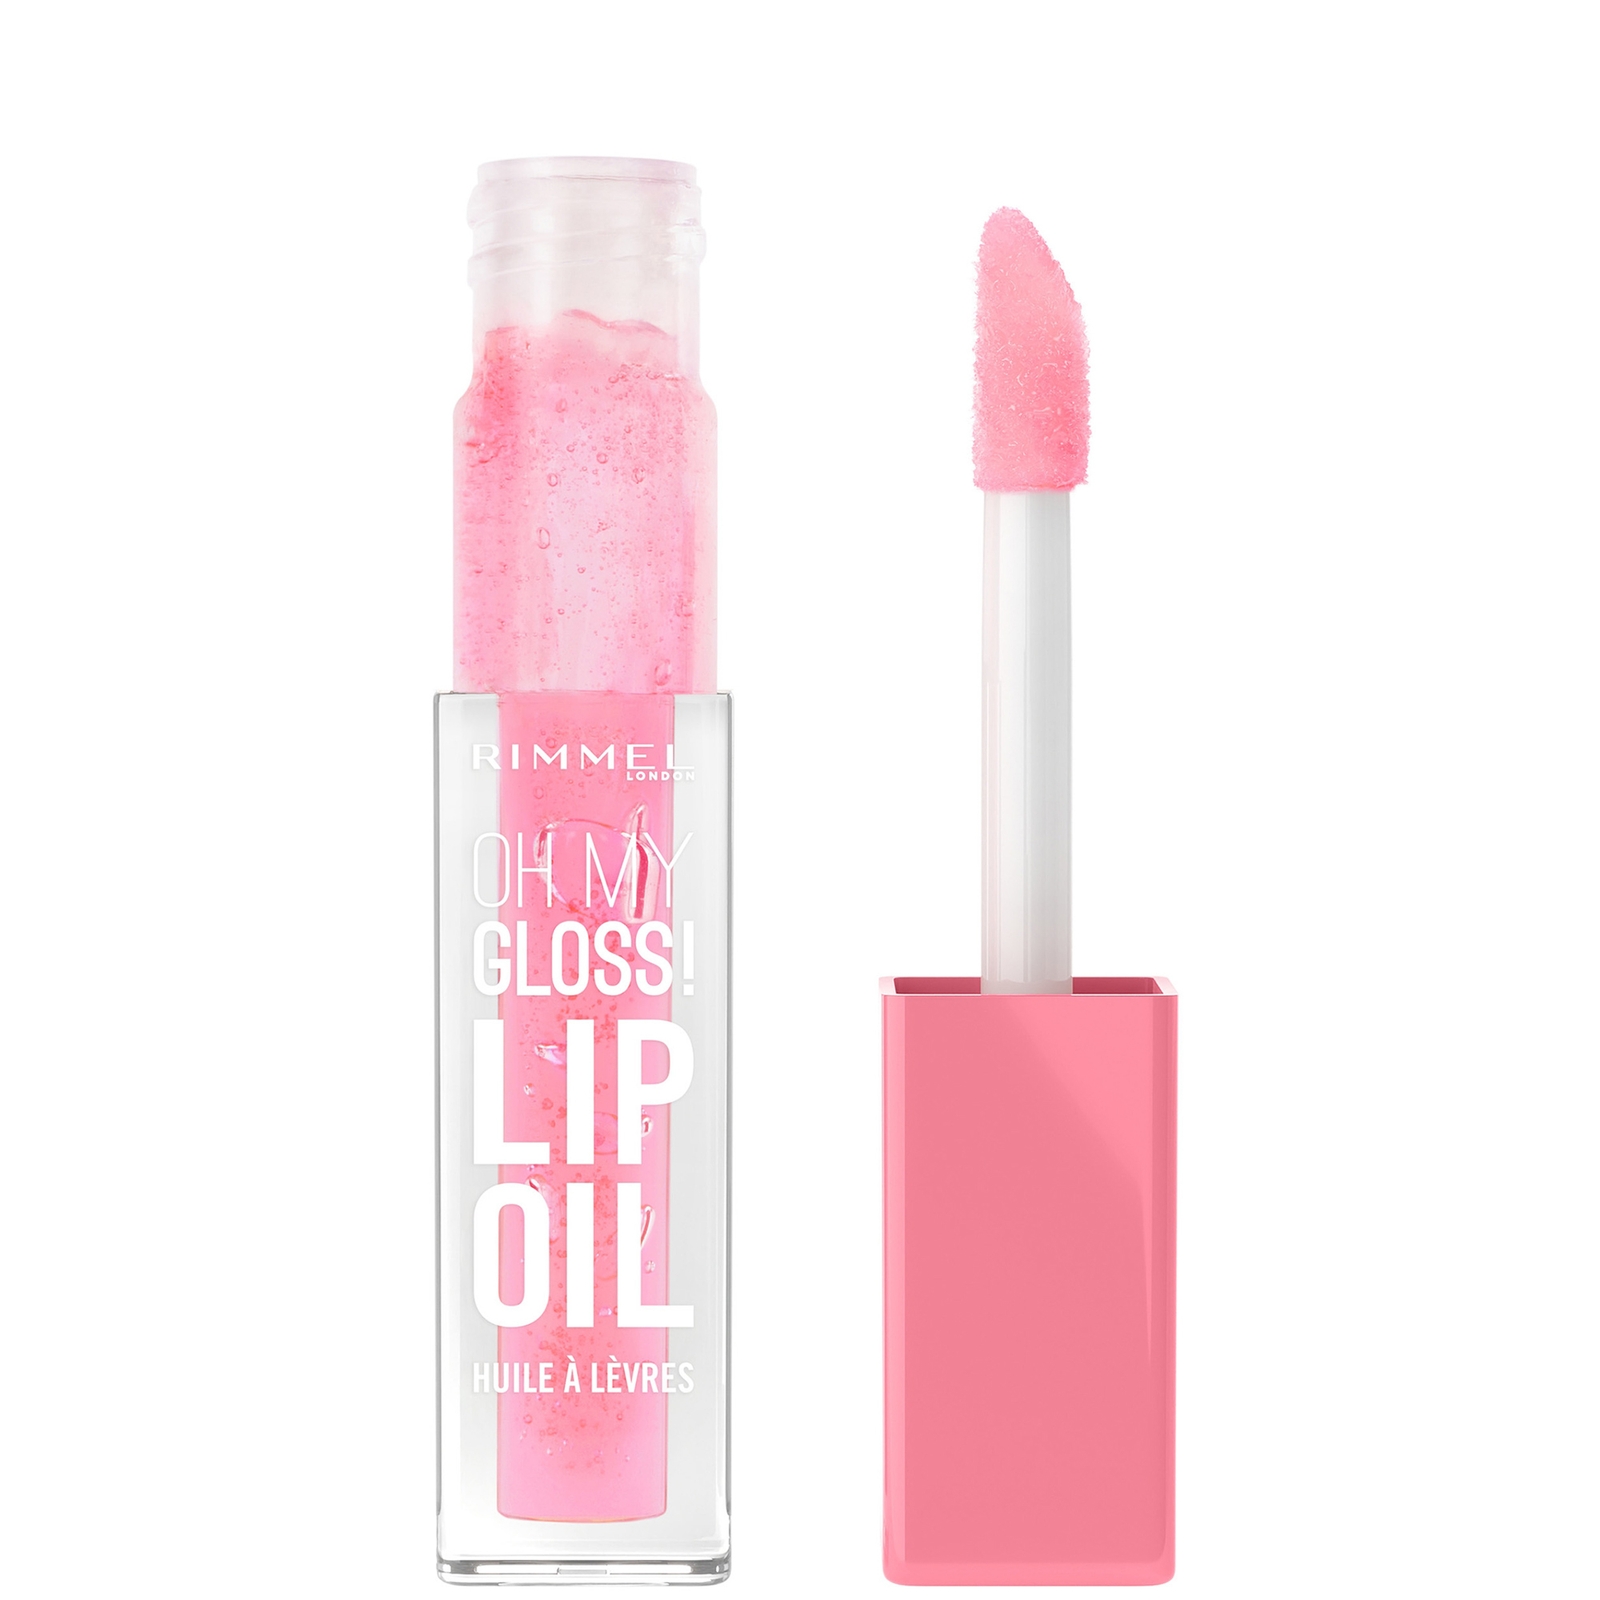 Image of Rimmel Oh My Gloss! Lip Oil 6ml (Various Shades) - Pink Flush